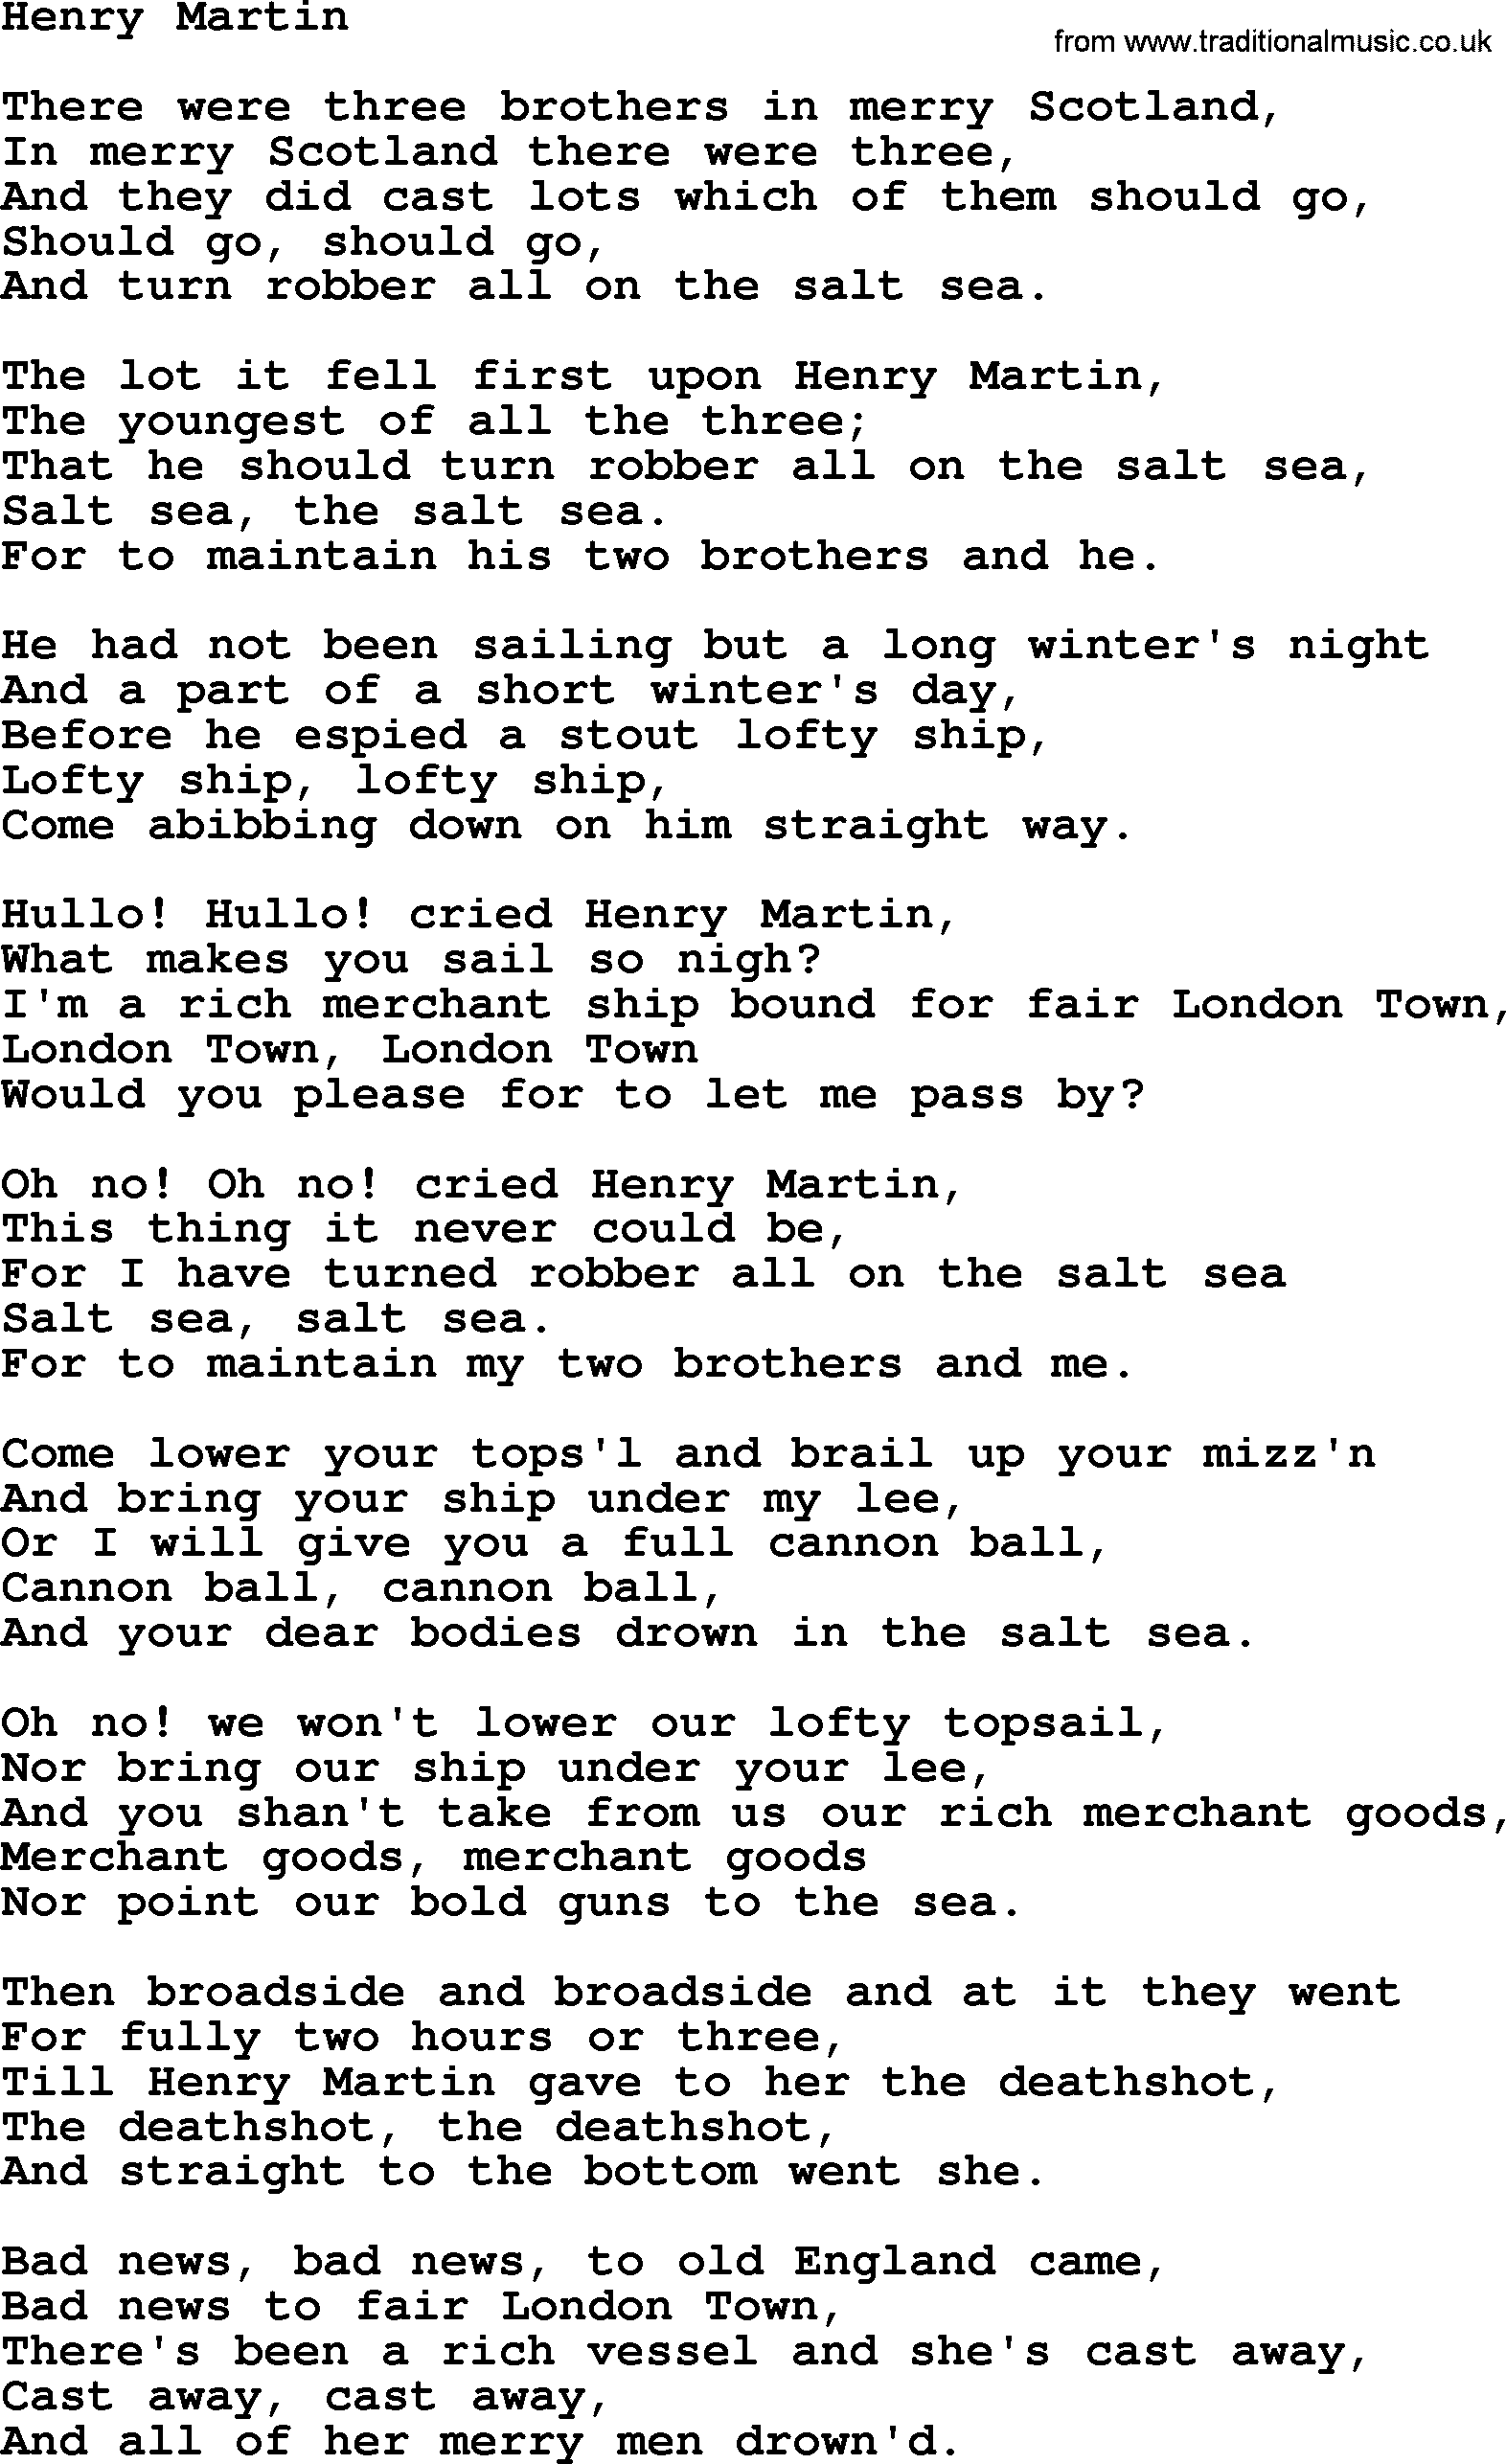 Joan Baez song Henry Martin, lyrics